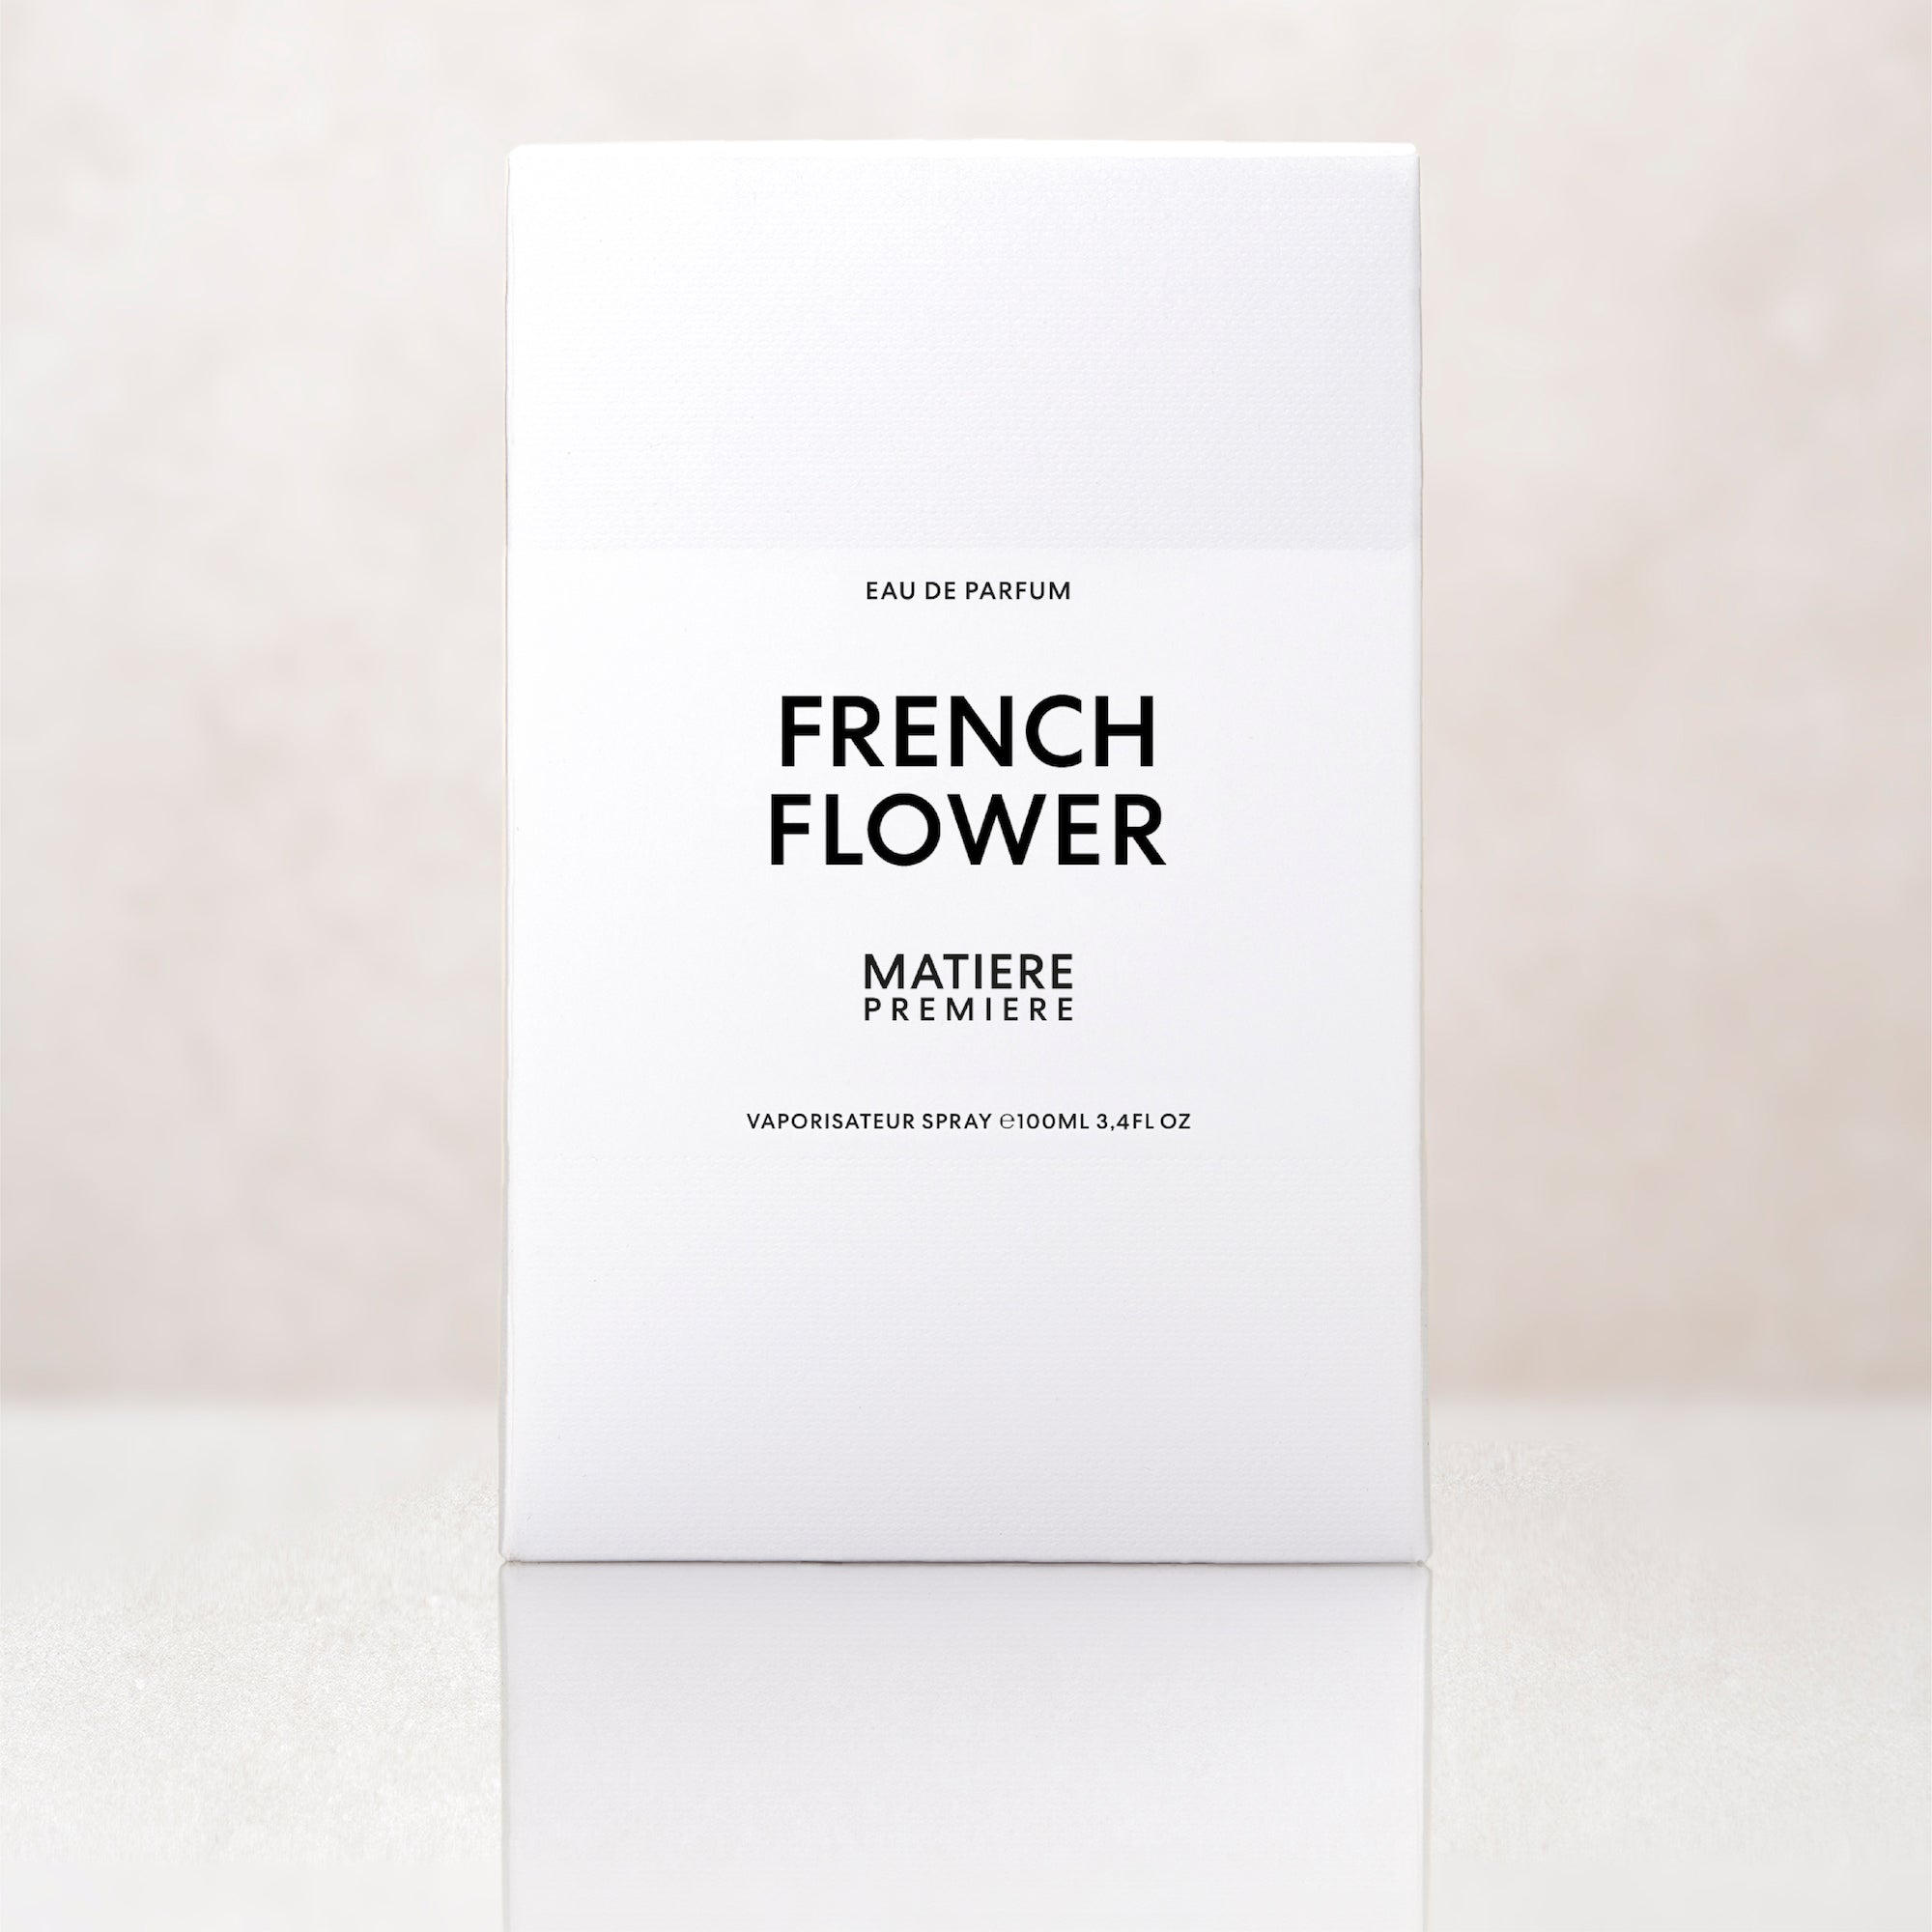 MATIERE PREMIERE- FRENCH FLOWER